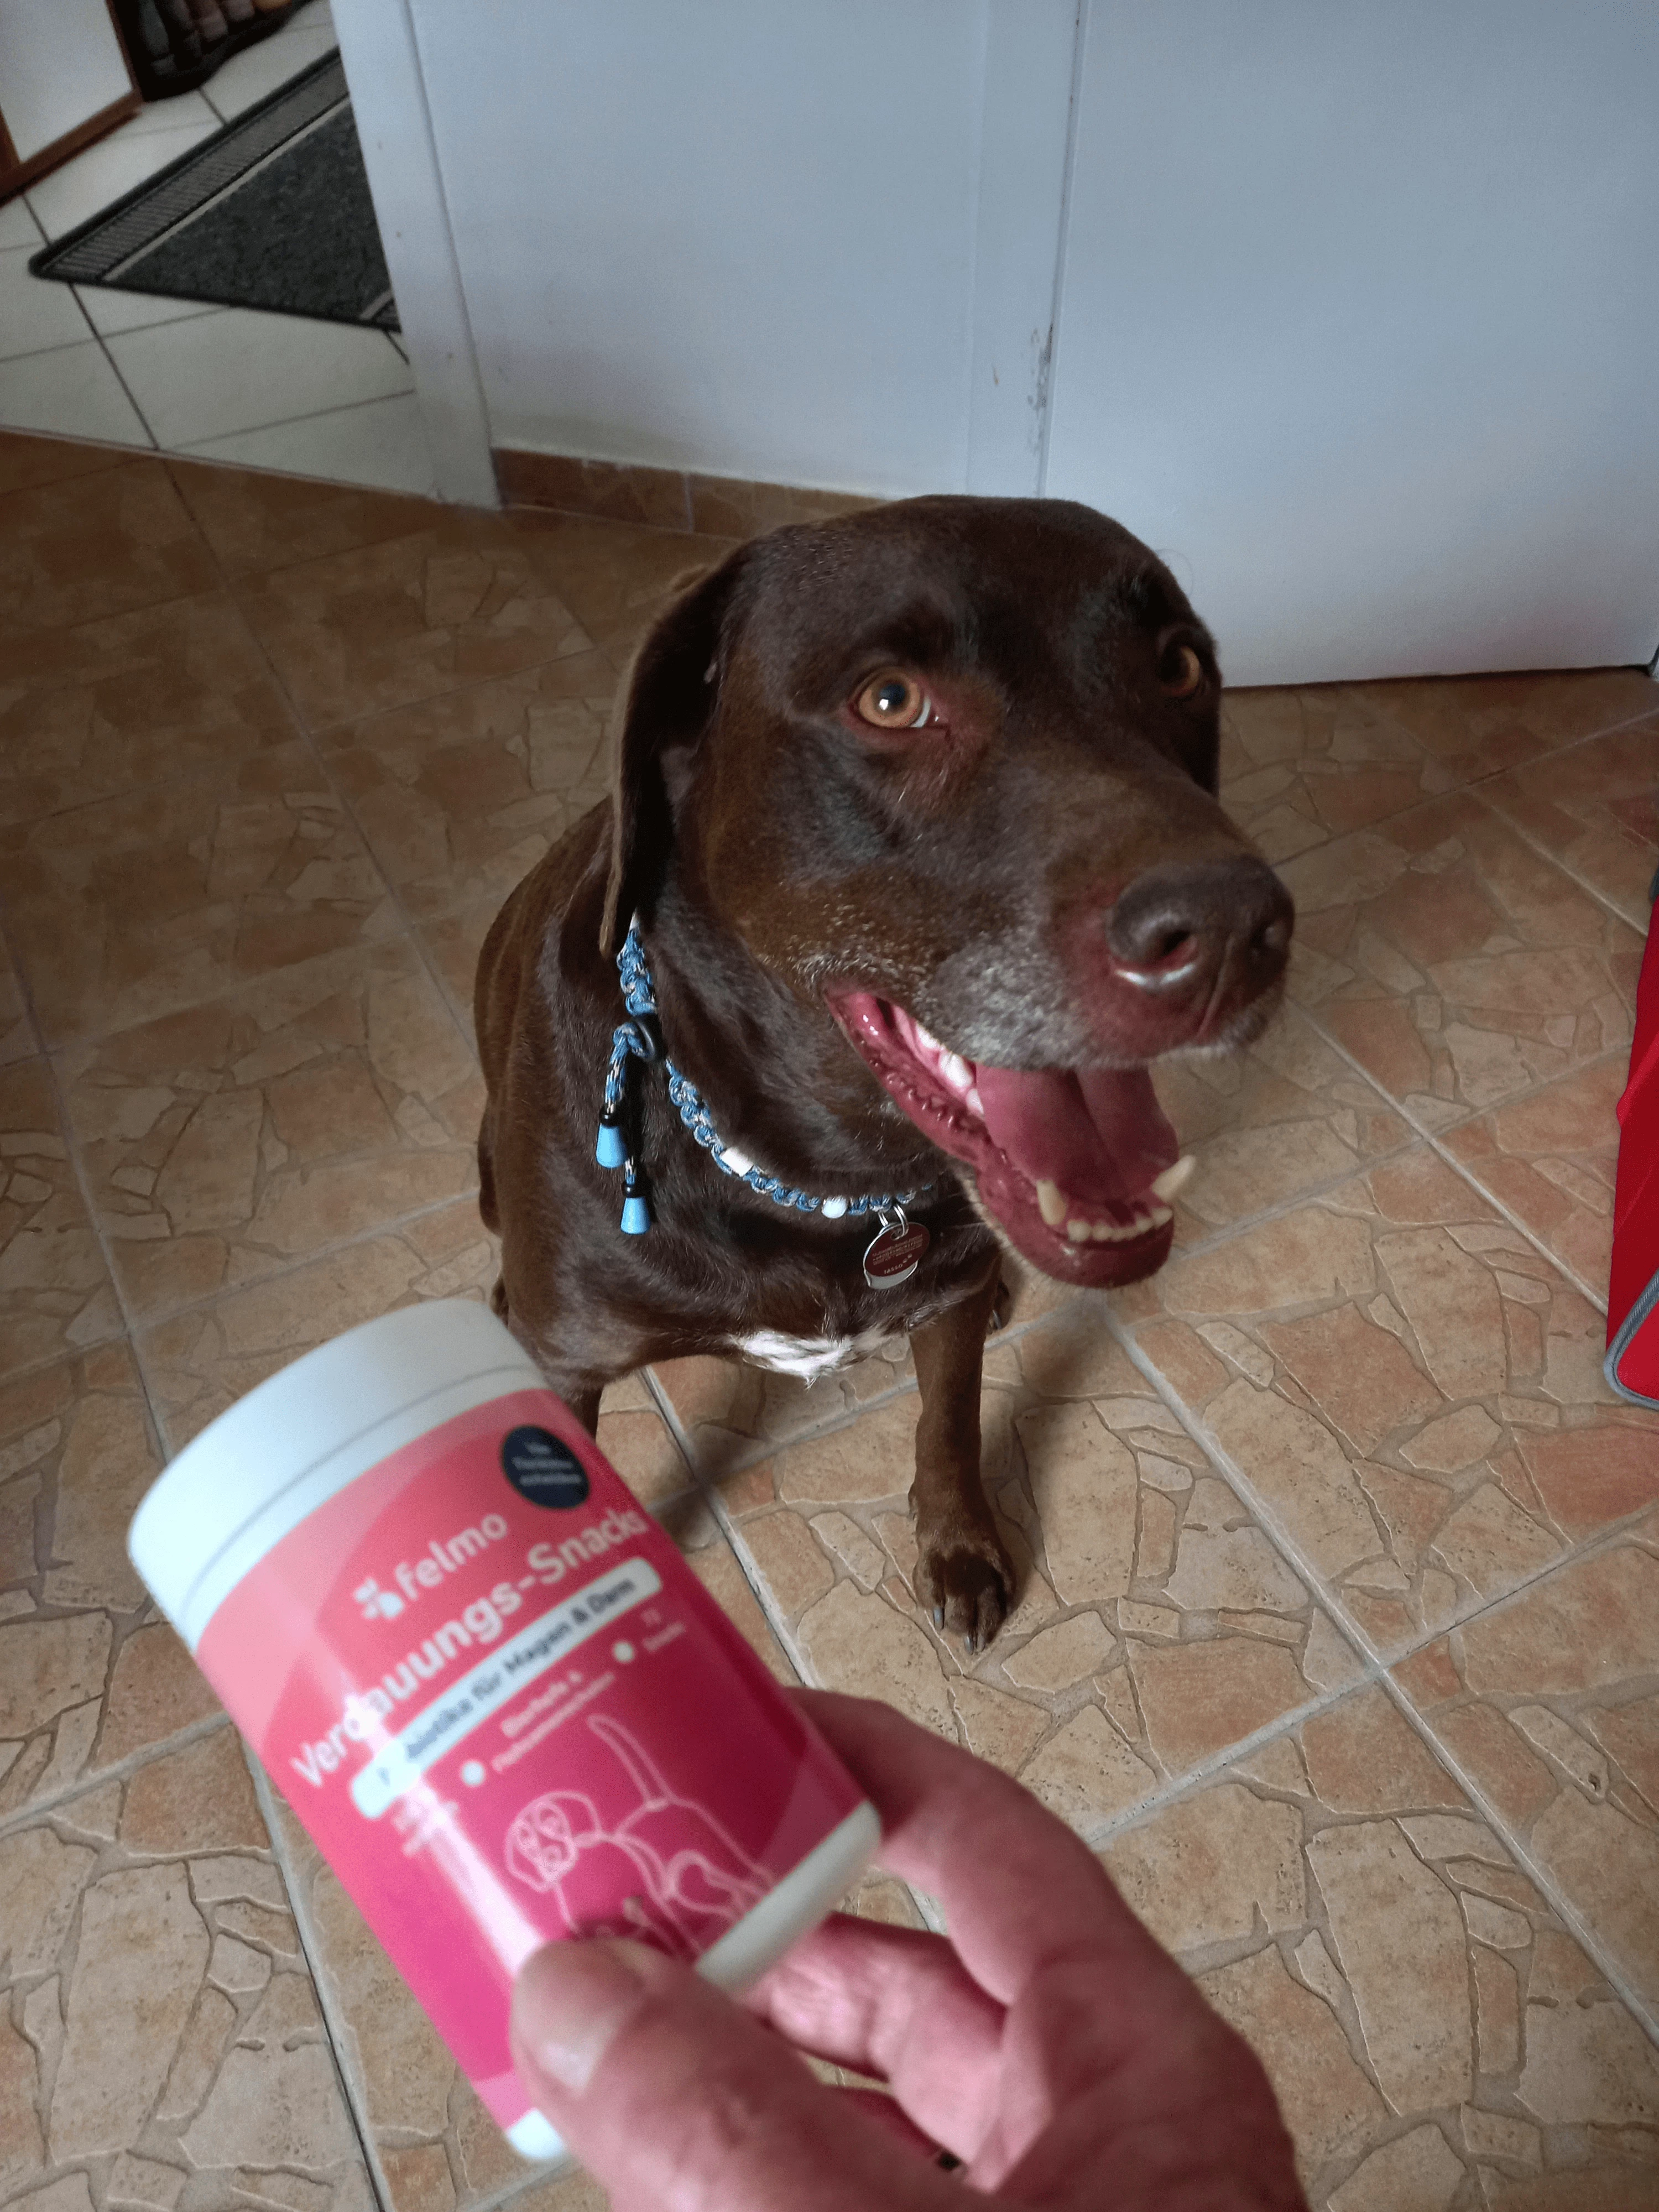 Besitzer gibt Hund Mio felmo Verdauungs-Snacks